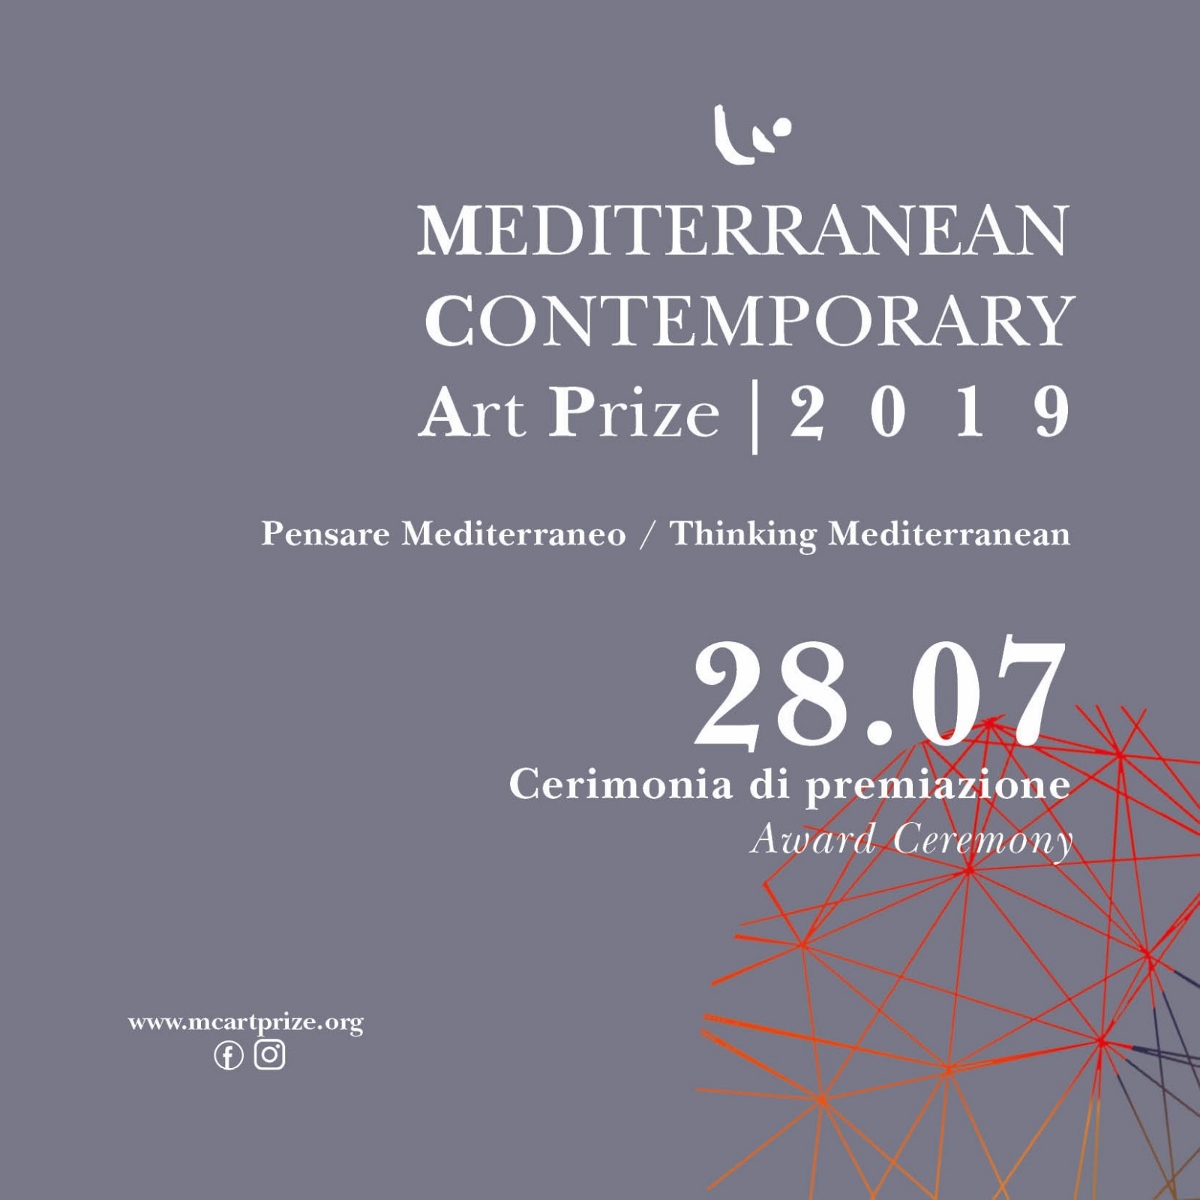 Mediterranean Contemporary Art Prize